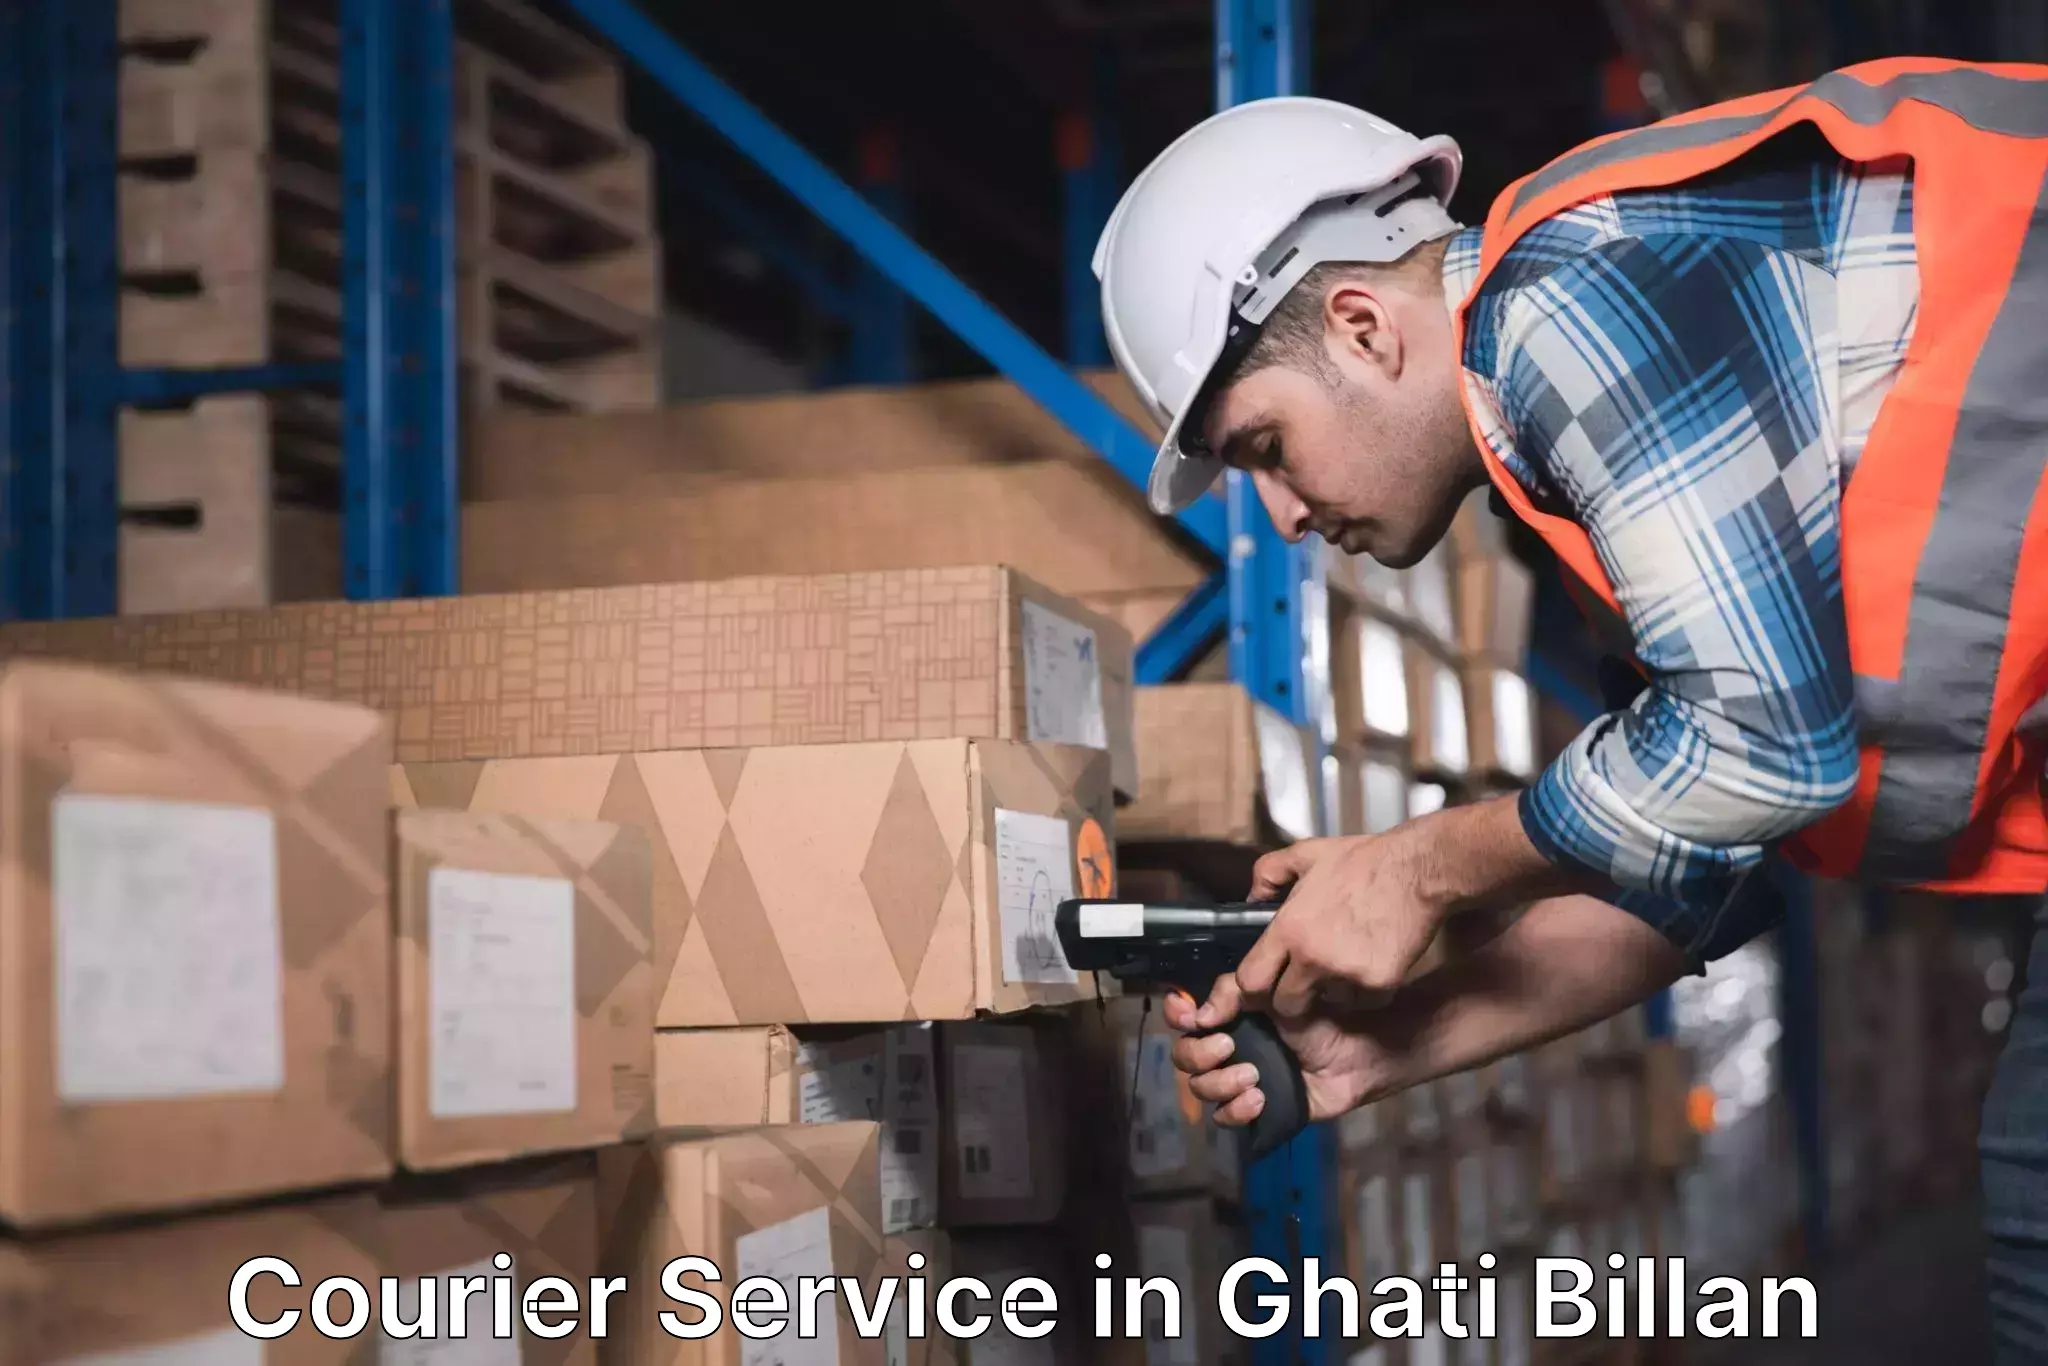 Fastest parcel delivery in Ghati Billan